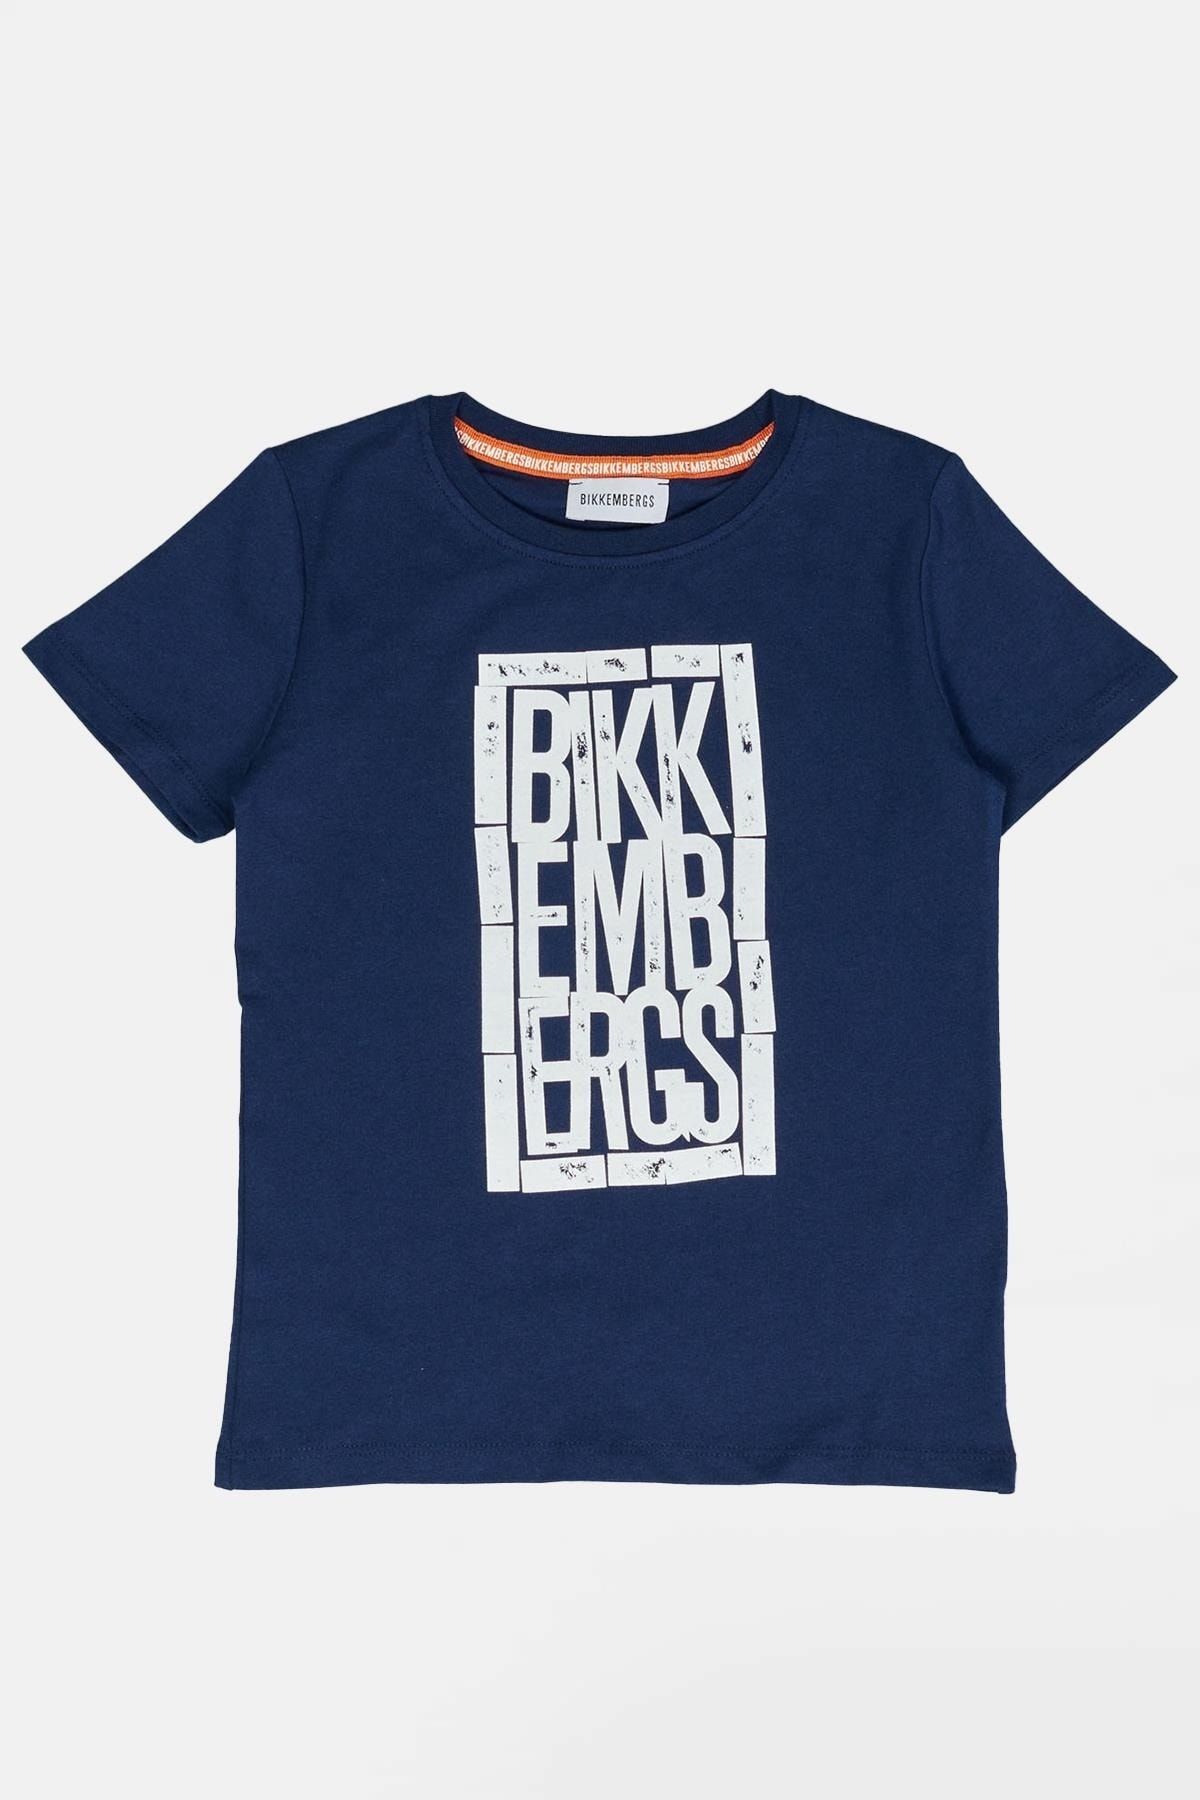 Bikkembergs Erkek Çocuk Lacivert T-shirt 23ss0bk1484